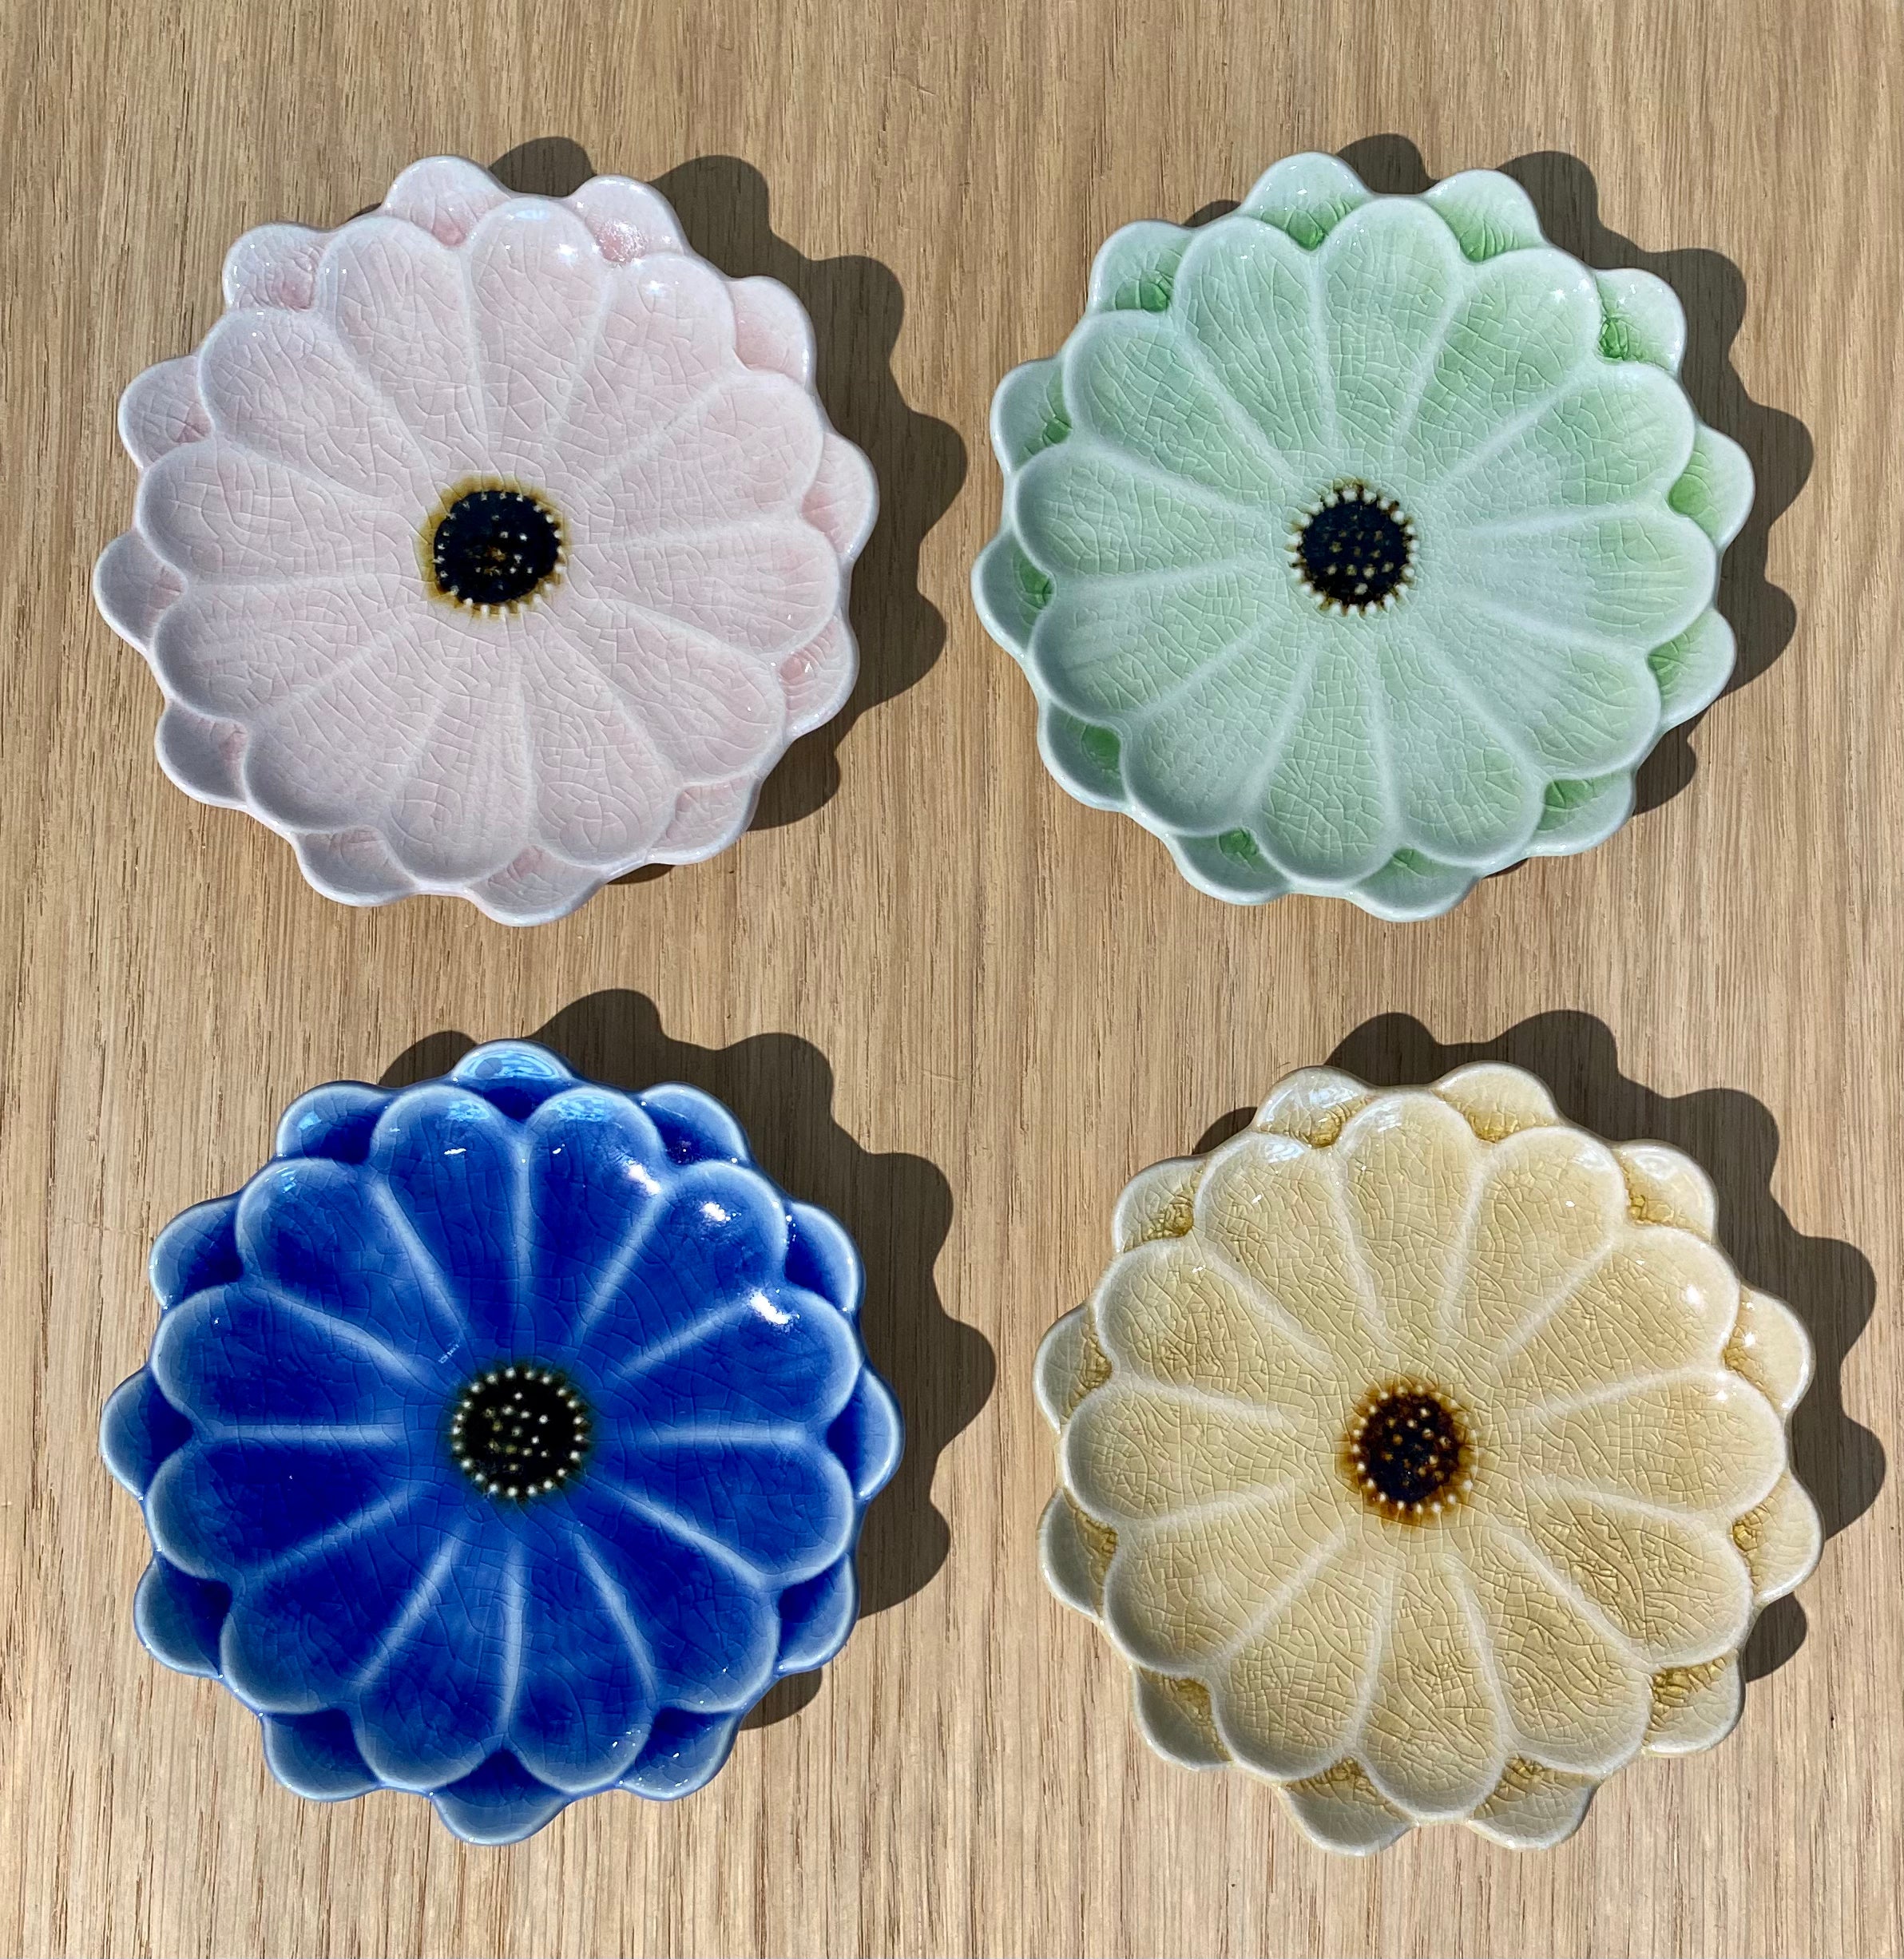 Flower plates